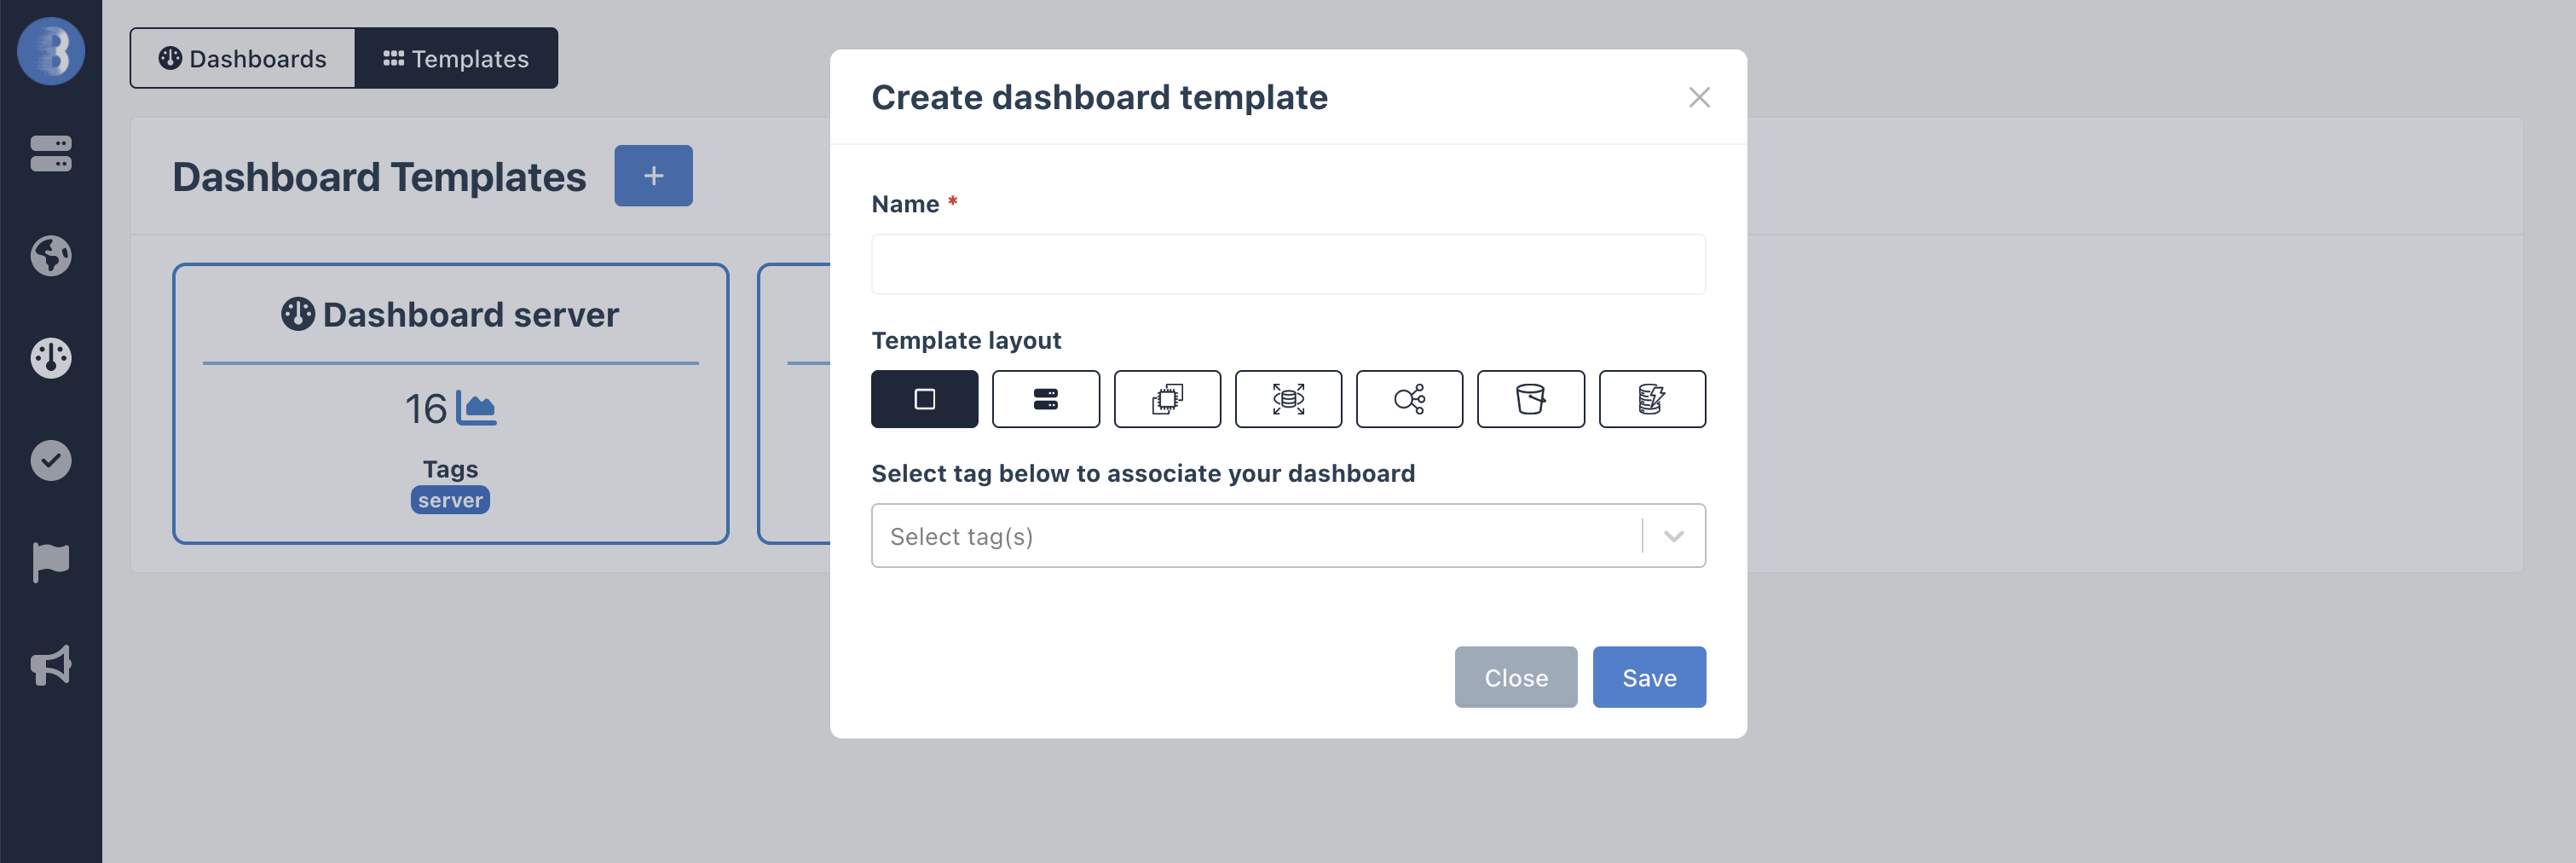 create dashboard templates